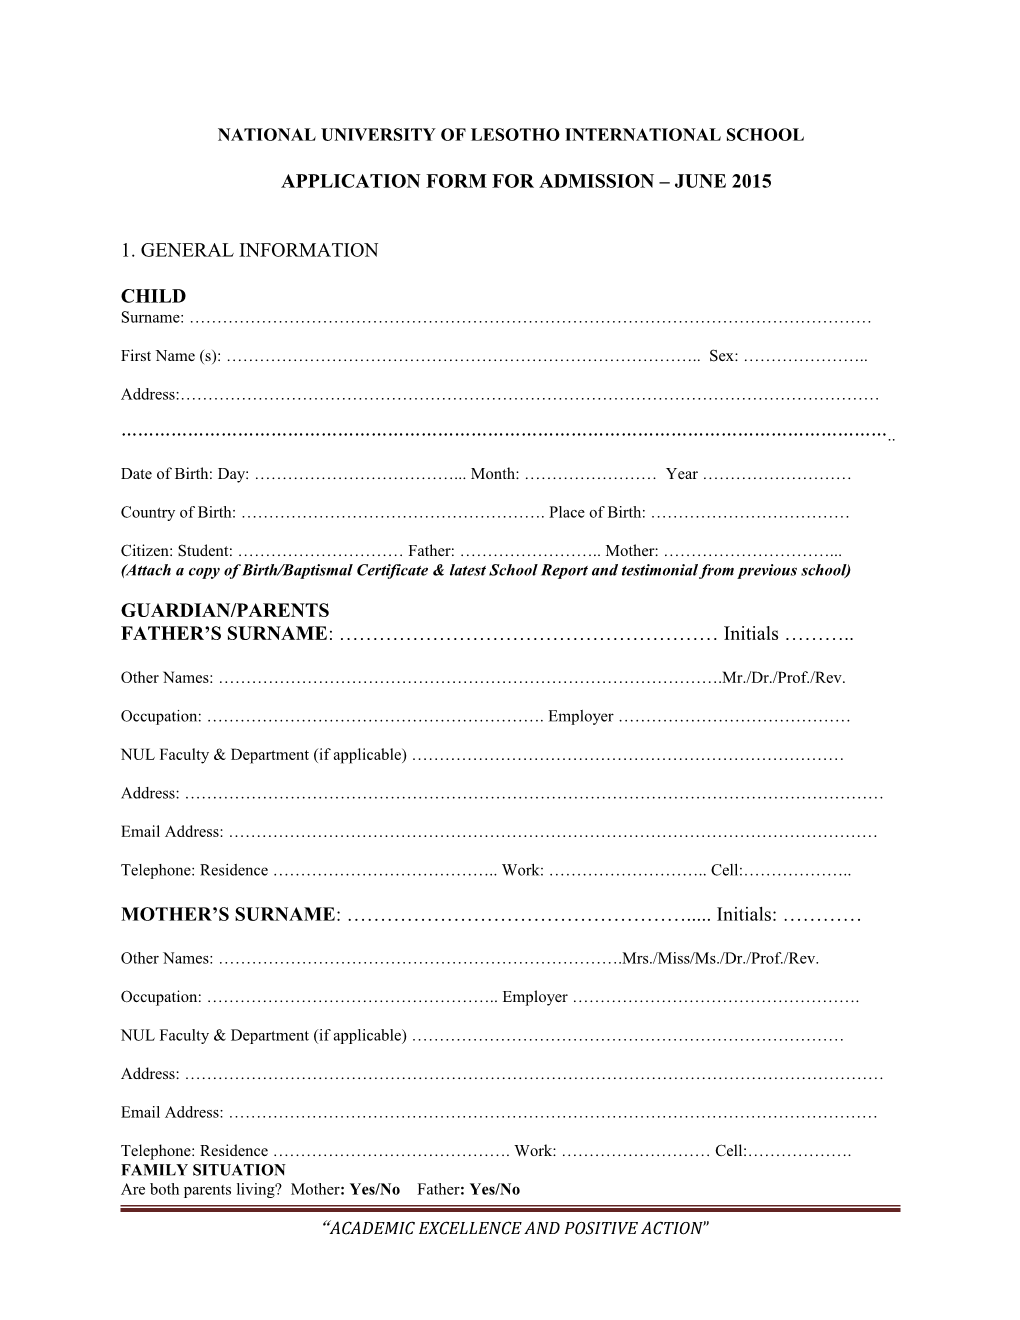 Application Form for Admission June 2015